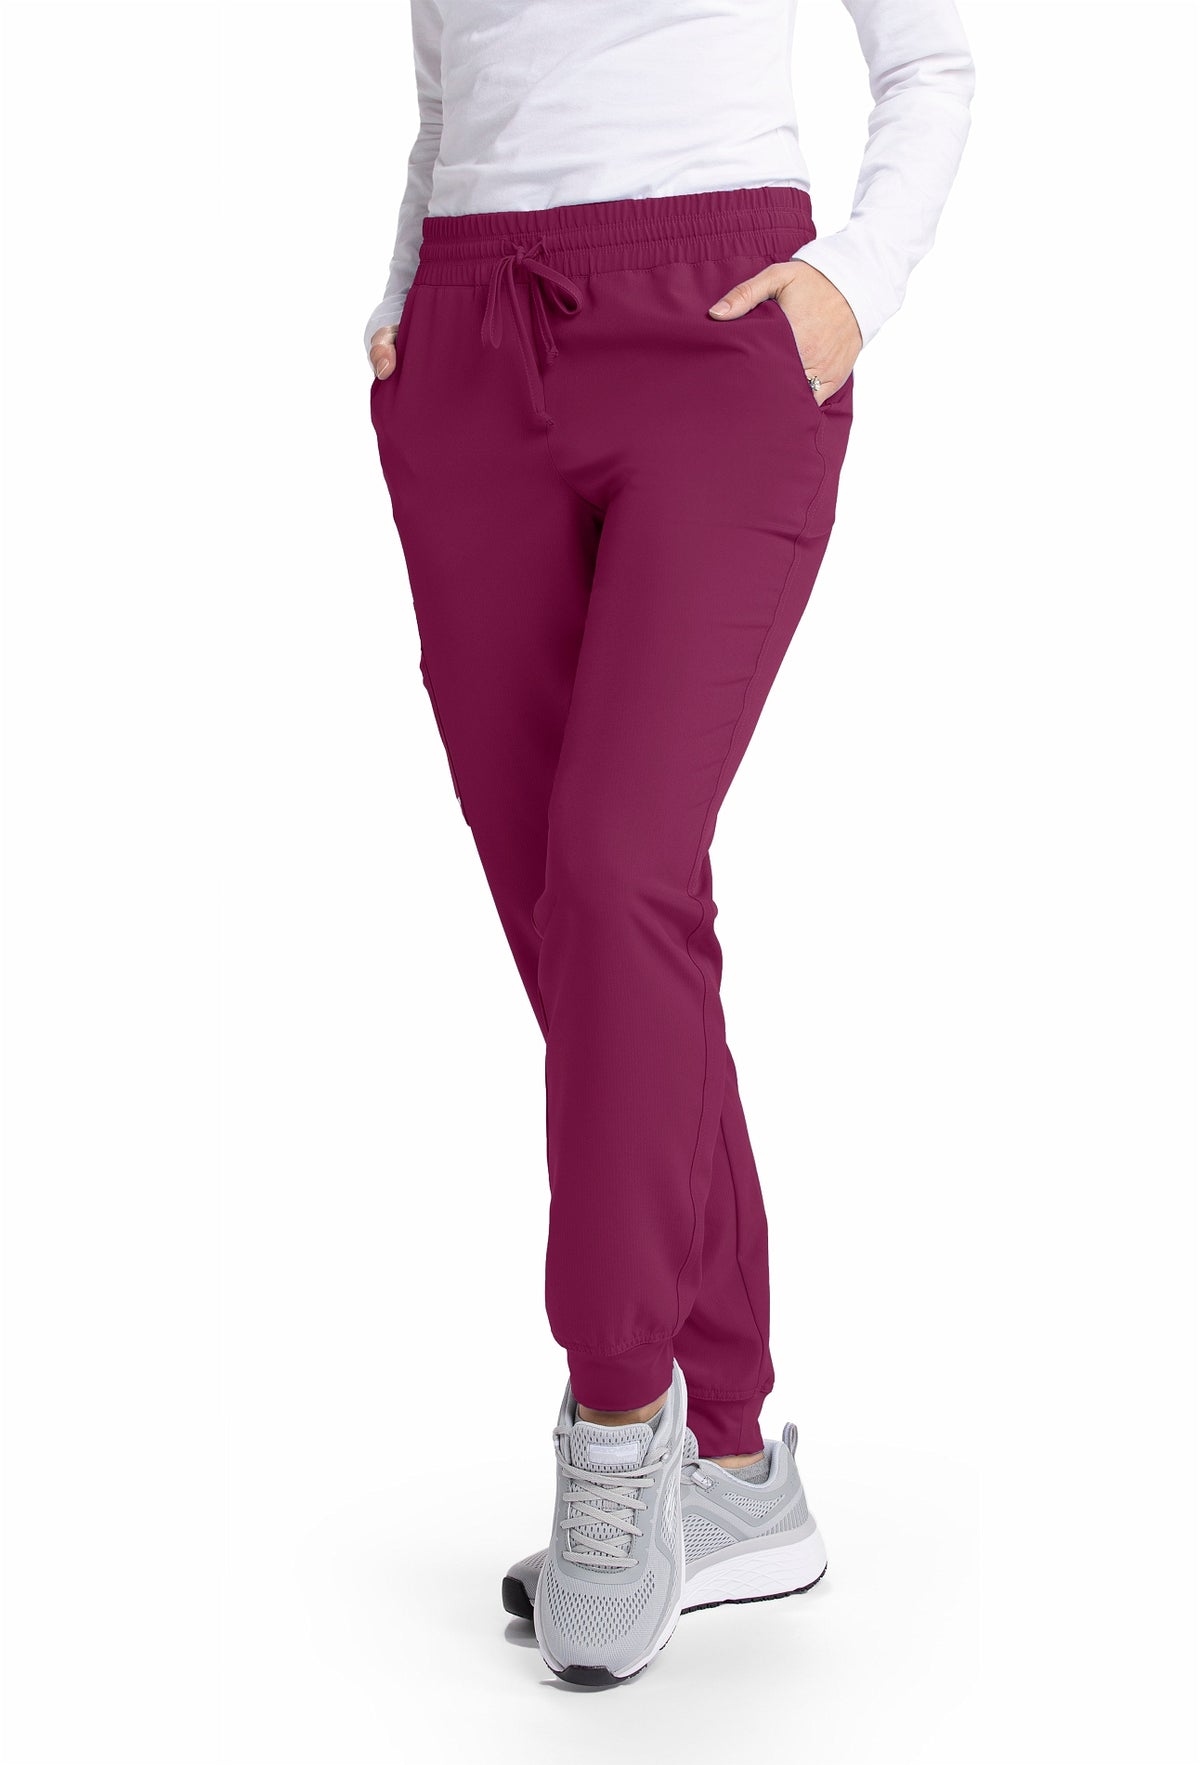 Grey&#39;s Anatomy Women&#39;s Theory 4 Pocket Drawcord Jogger_Wine - Work World - Workwear, Work Boots, Safety Gear